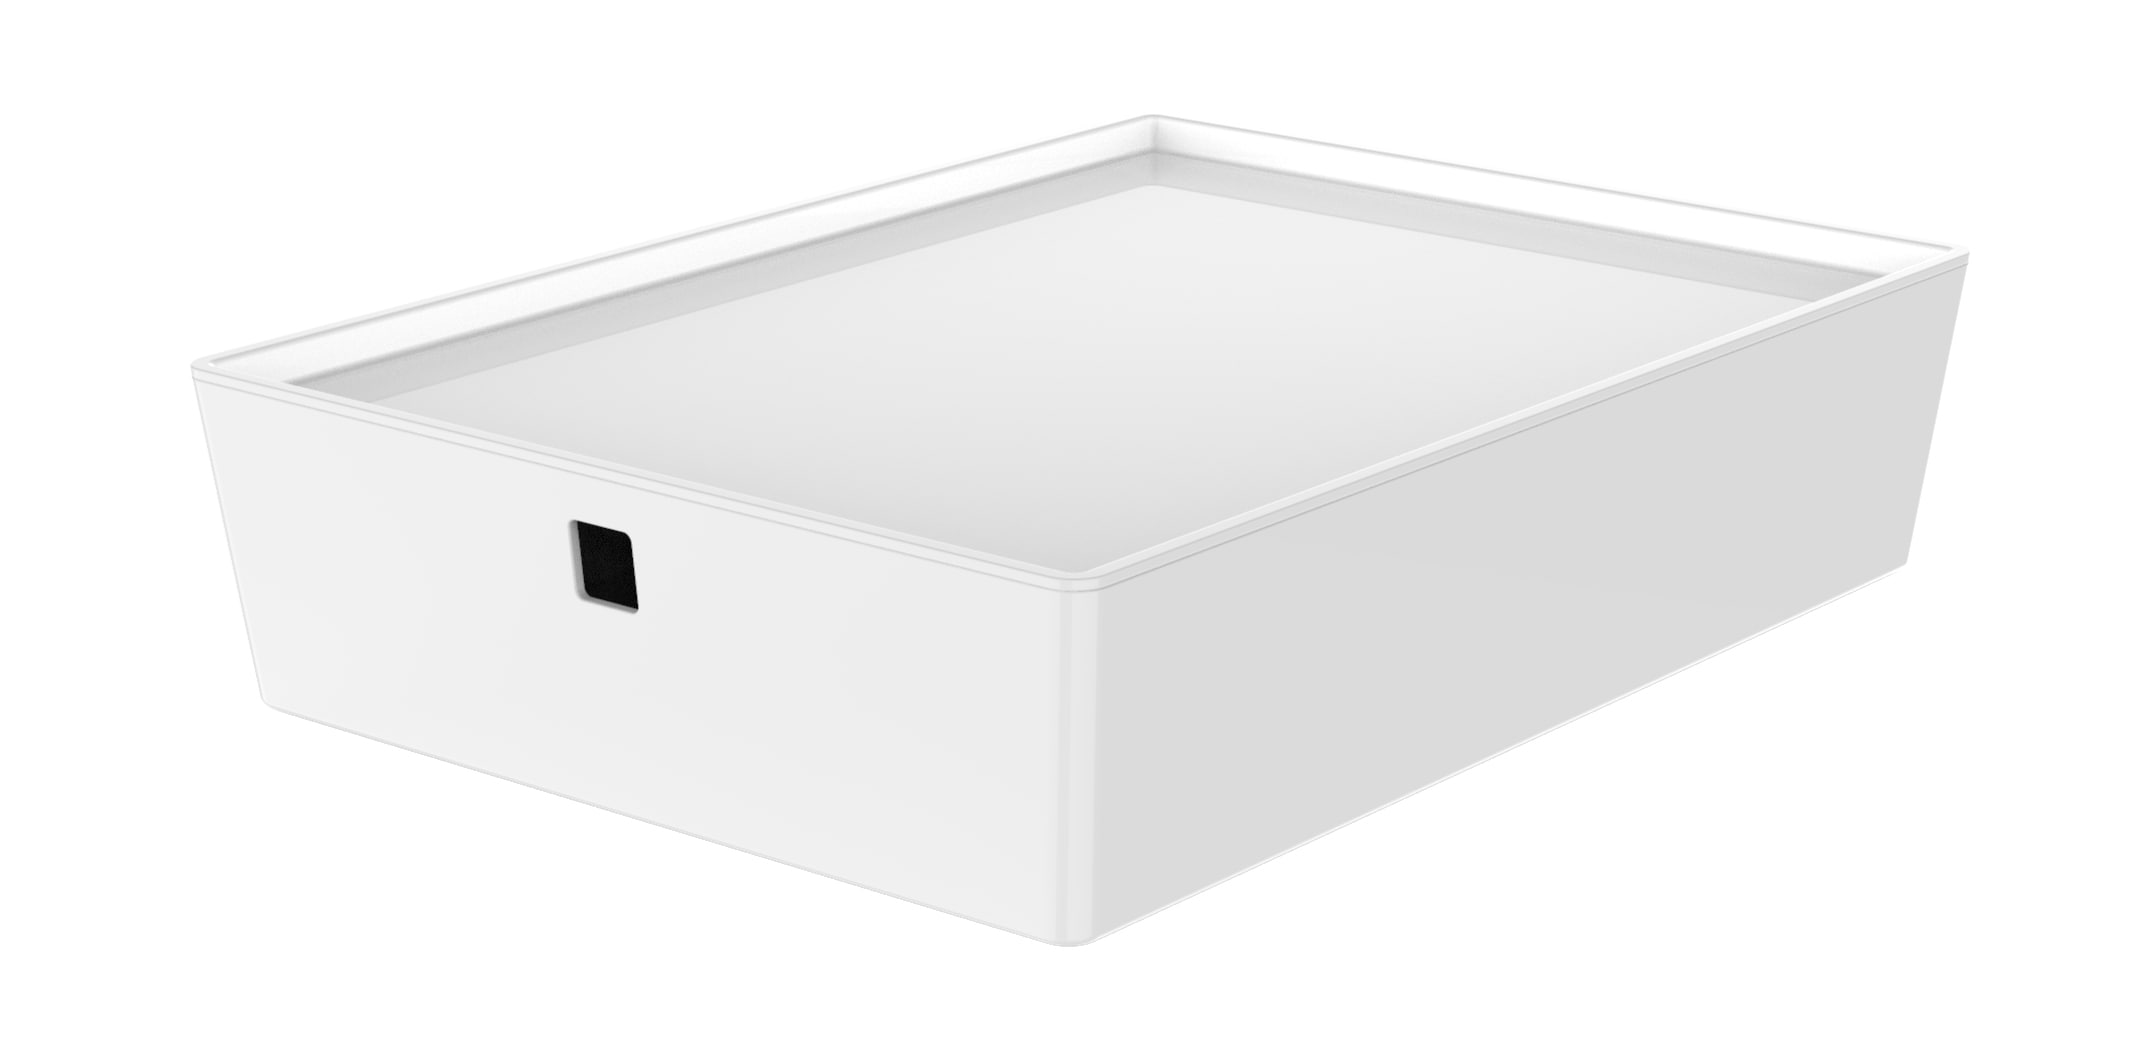  Storage Bin with Lid - White